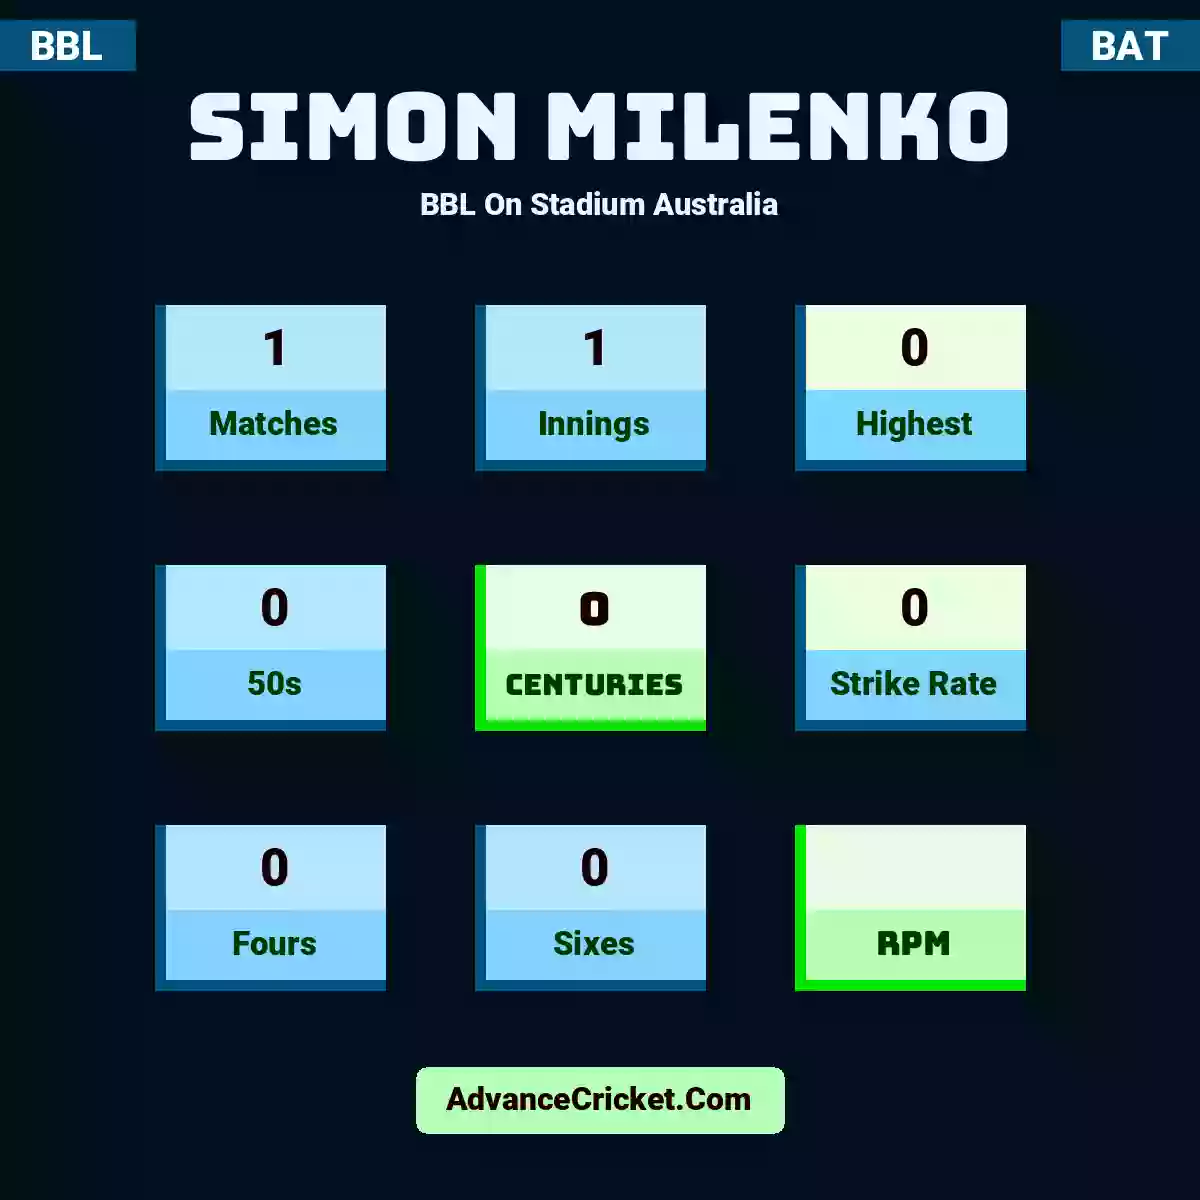 Simon Milenko BBL  On Stadium Australia, Simon Milenko played 1 matches, scored 0 runs as highest, 0 half-centuries, and 0 centuries, with a strike rate of 0. S.Milenko hit 0 fours and 0 sixes.